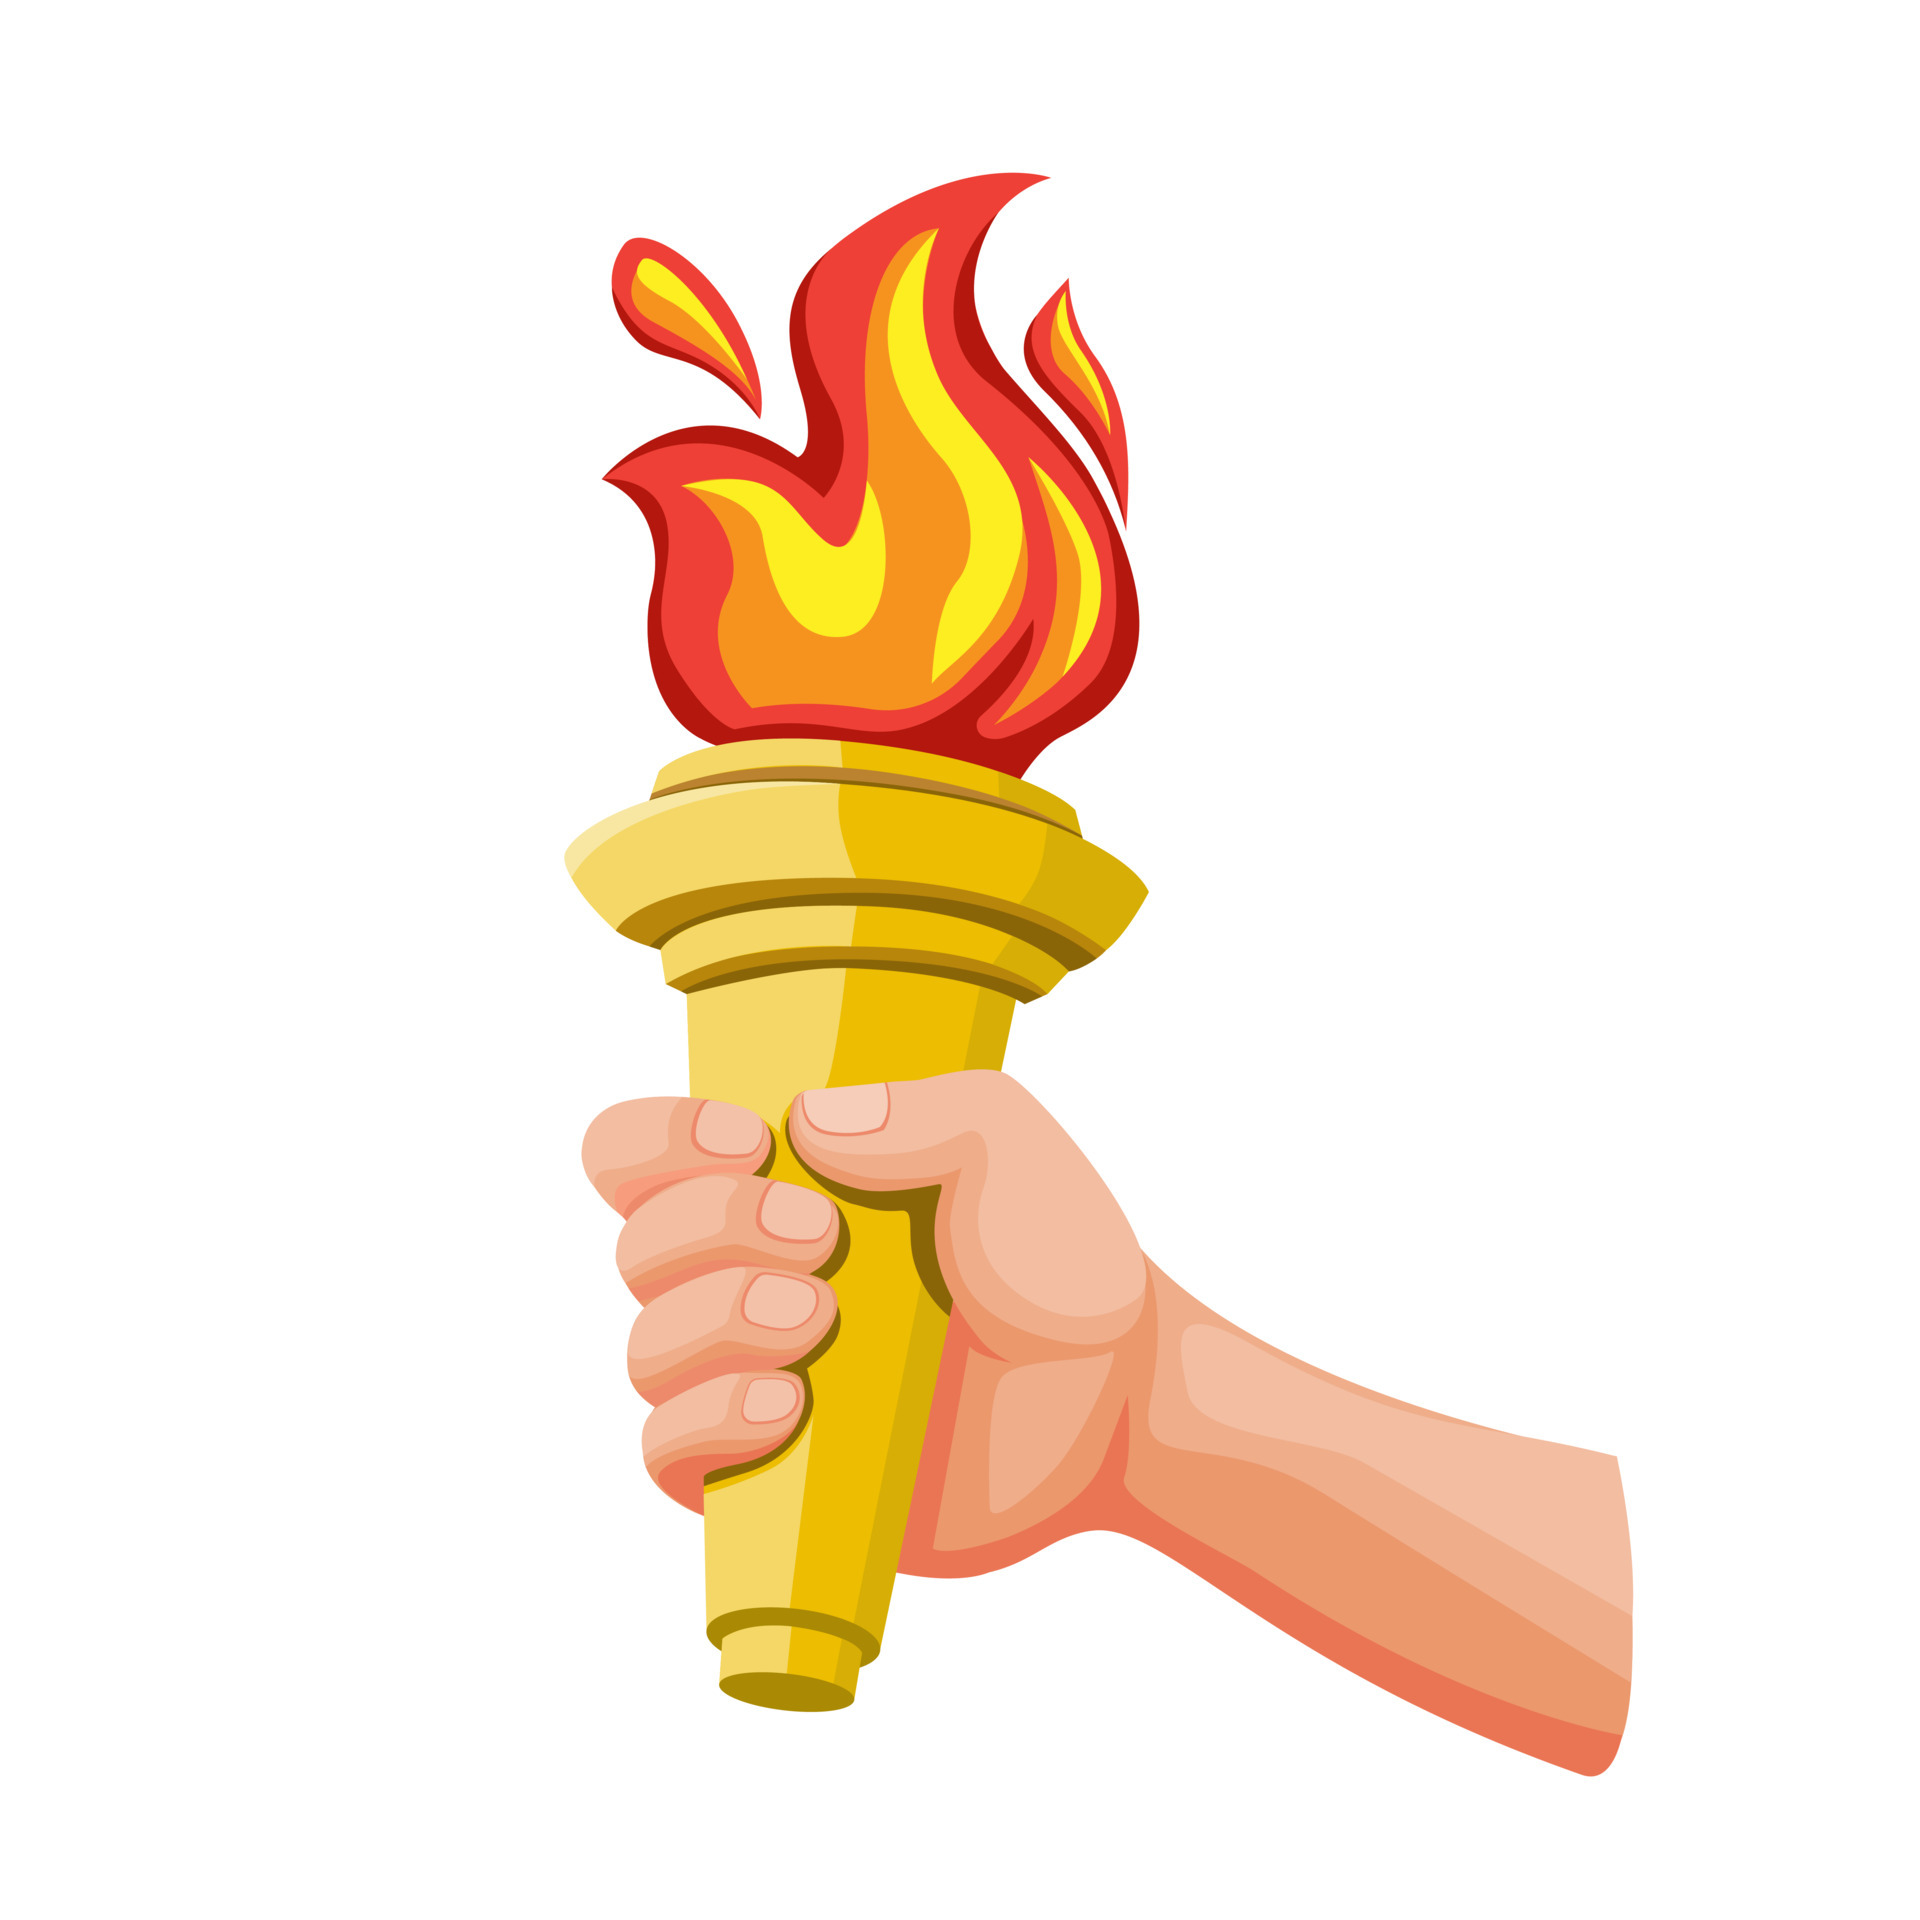 Share more than 70 hand mashal logo super hot - ceg.edu.vn